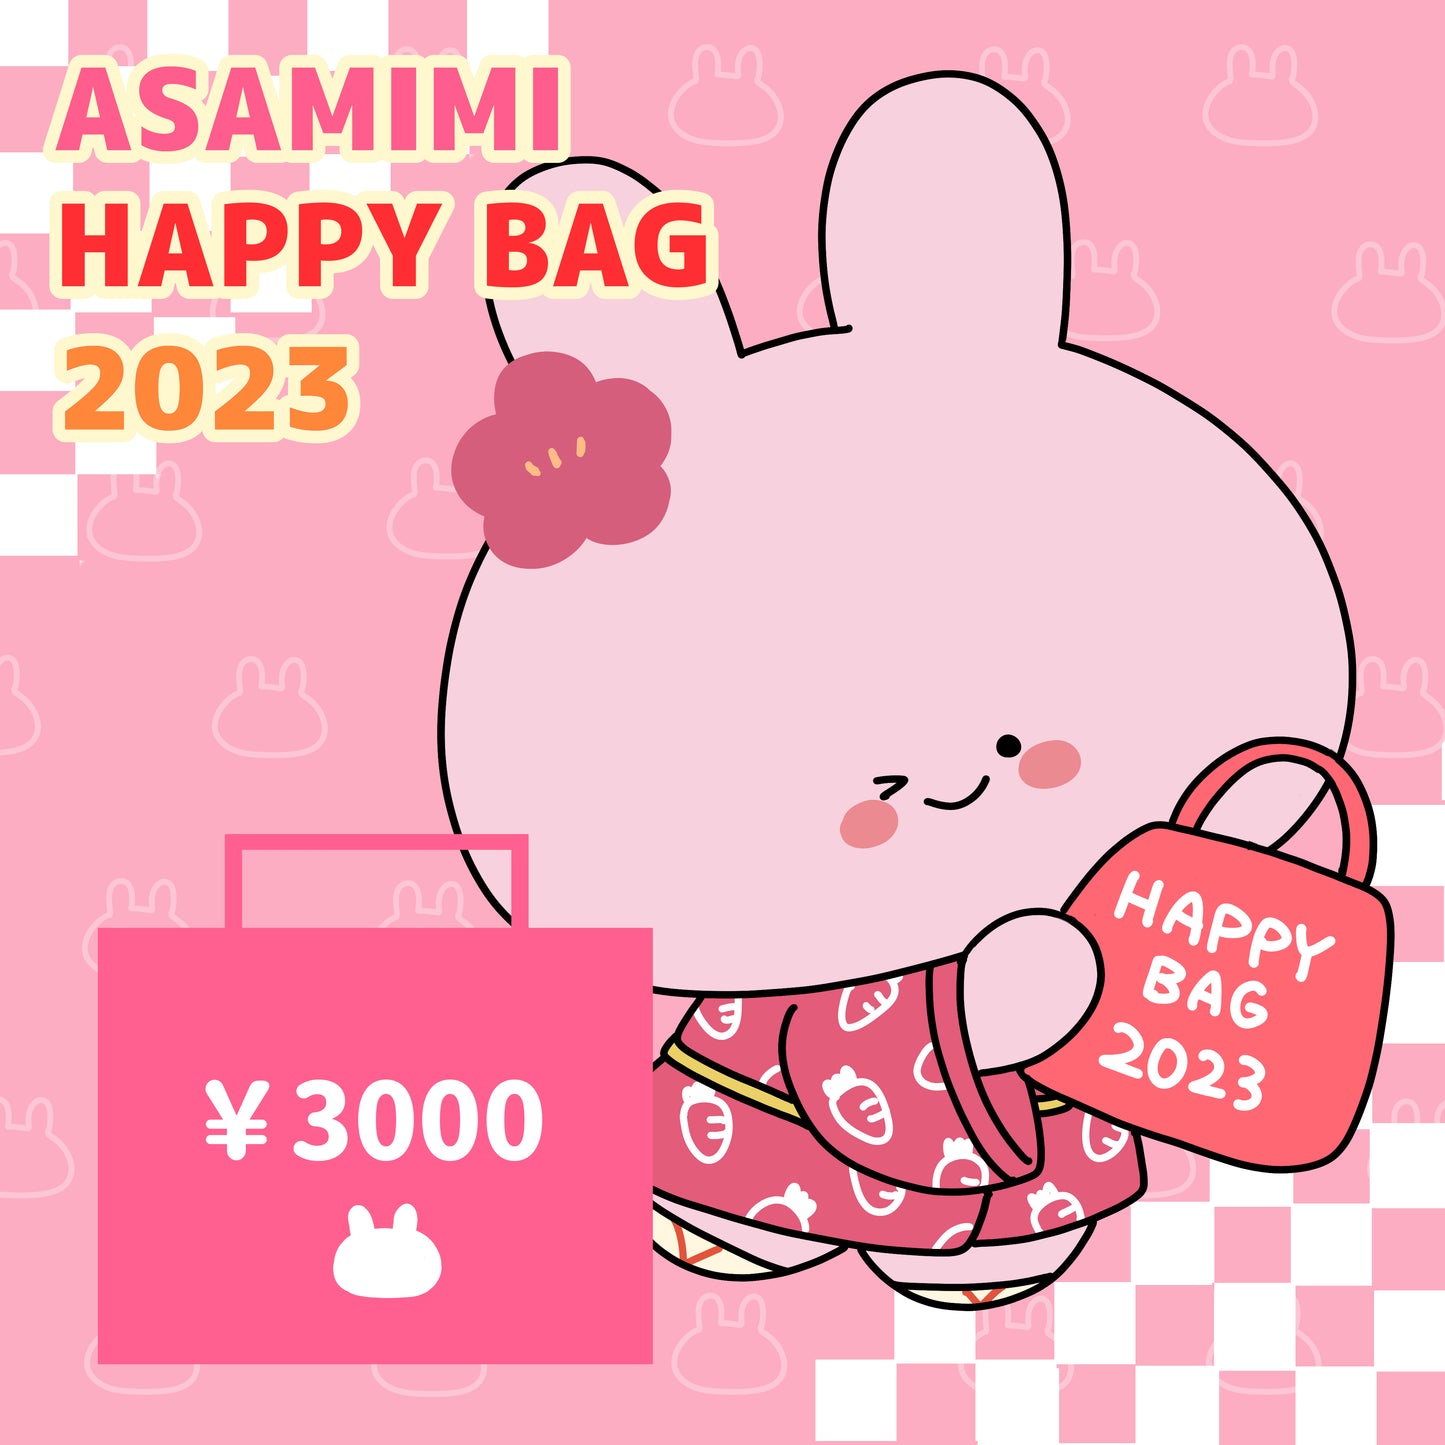 [麻美美醬]麻美美HAPPY BAG (¥3,000)